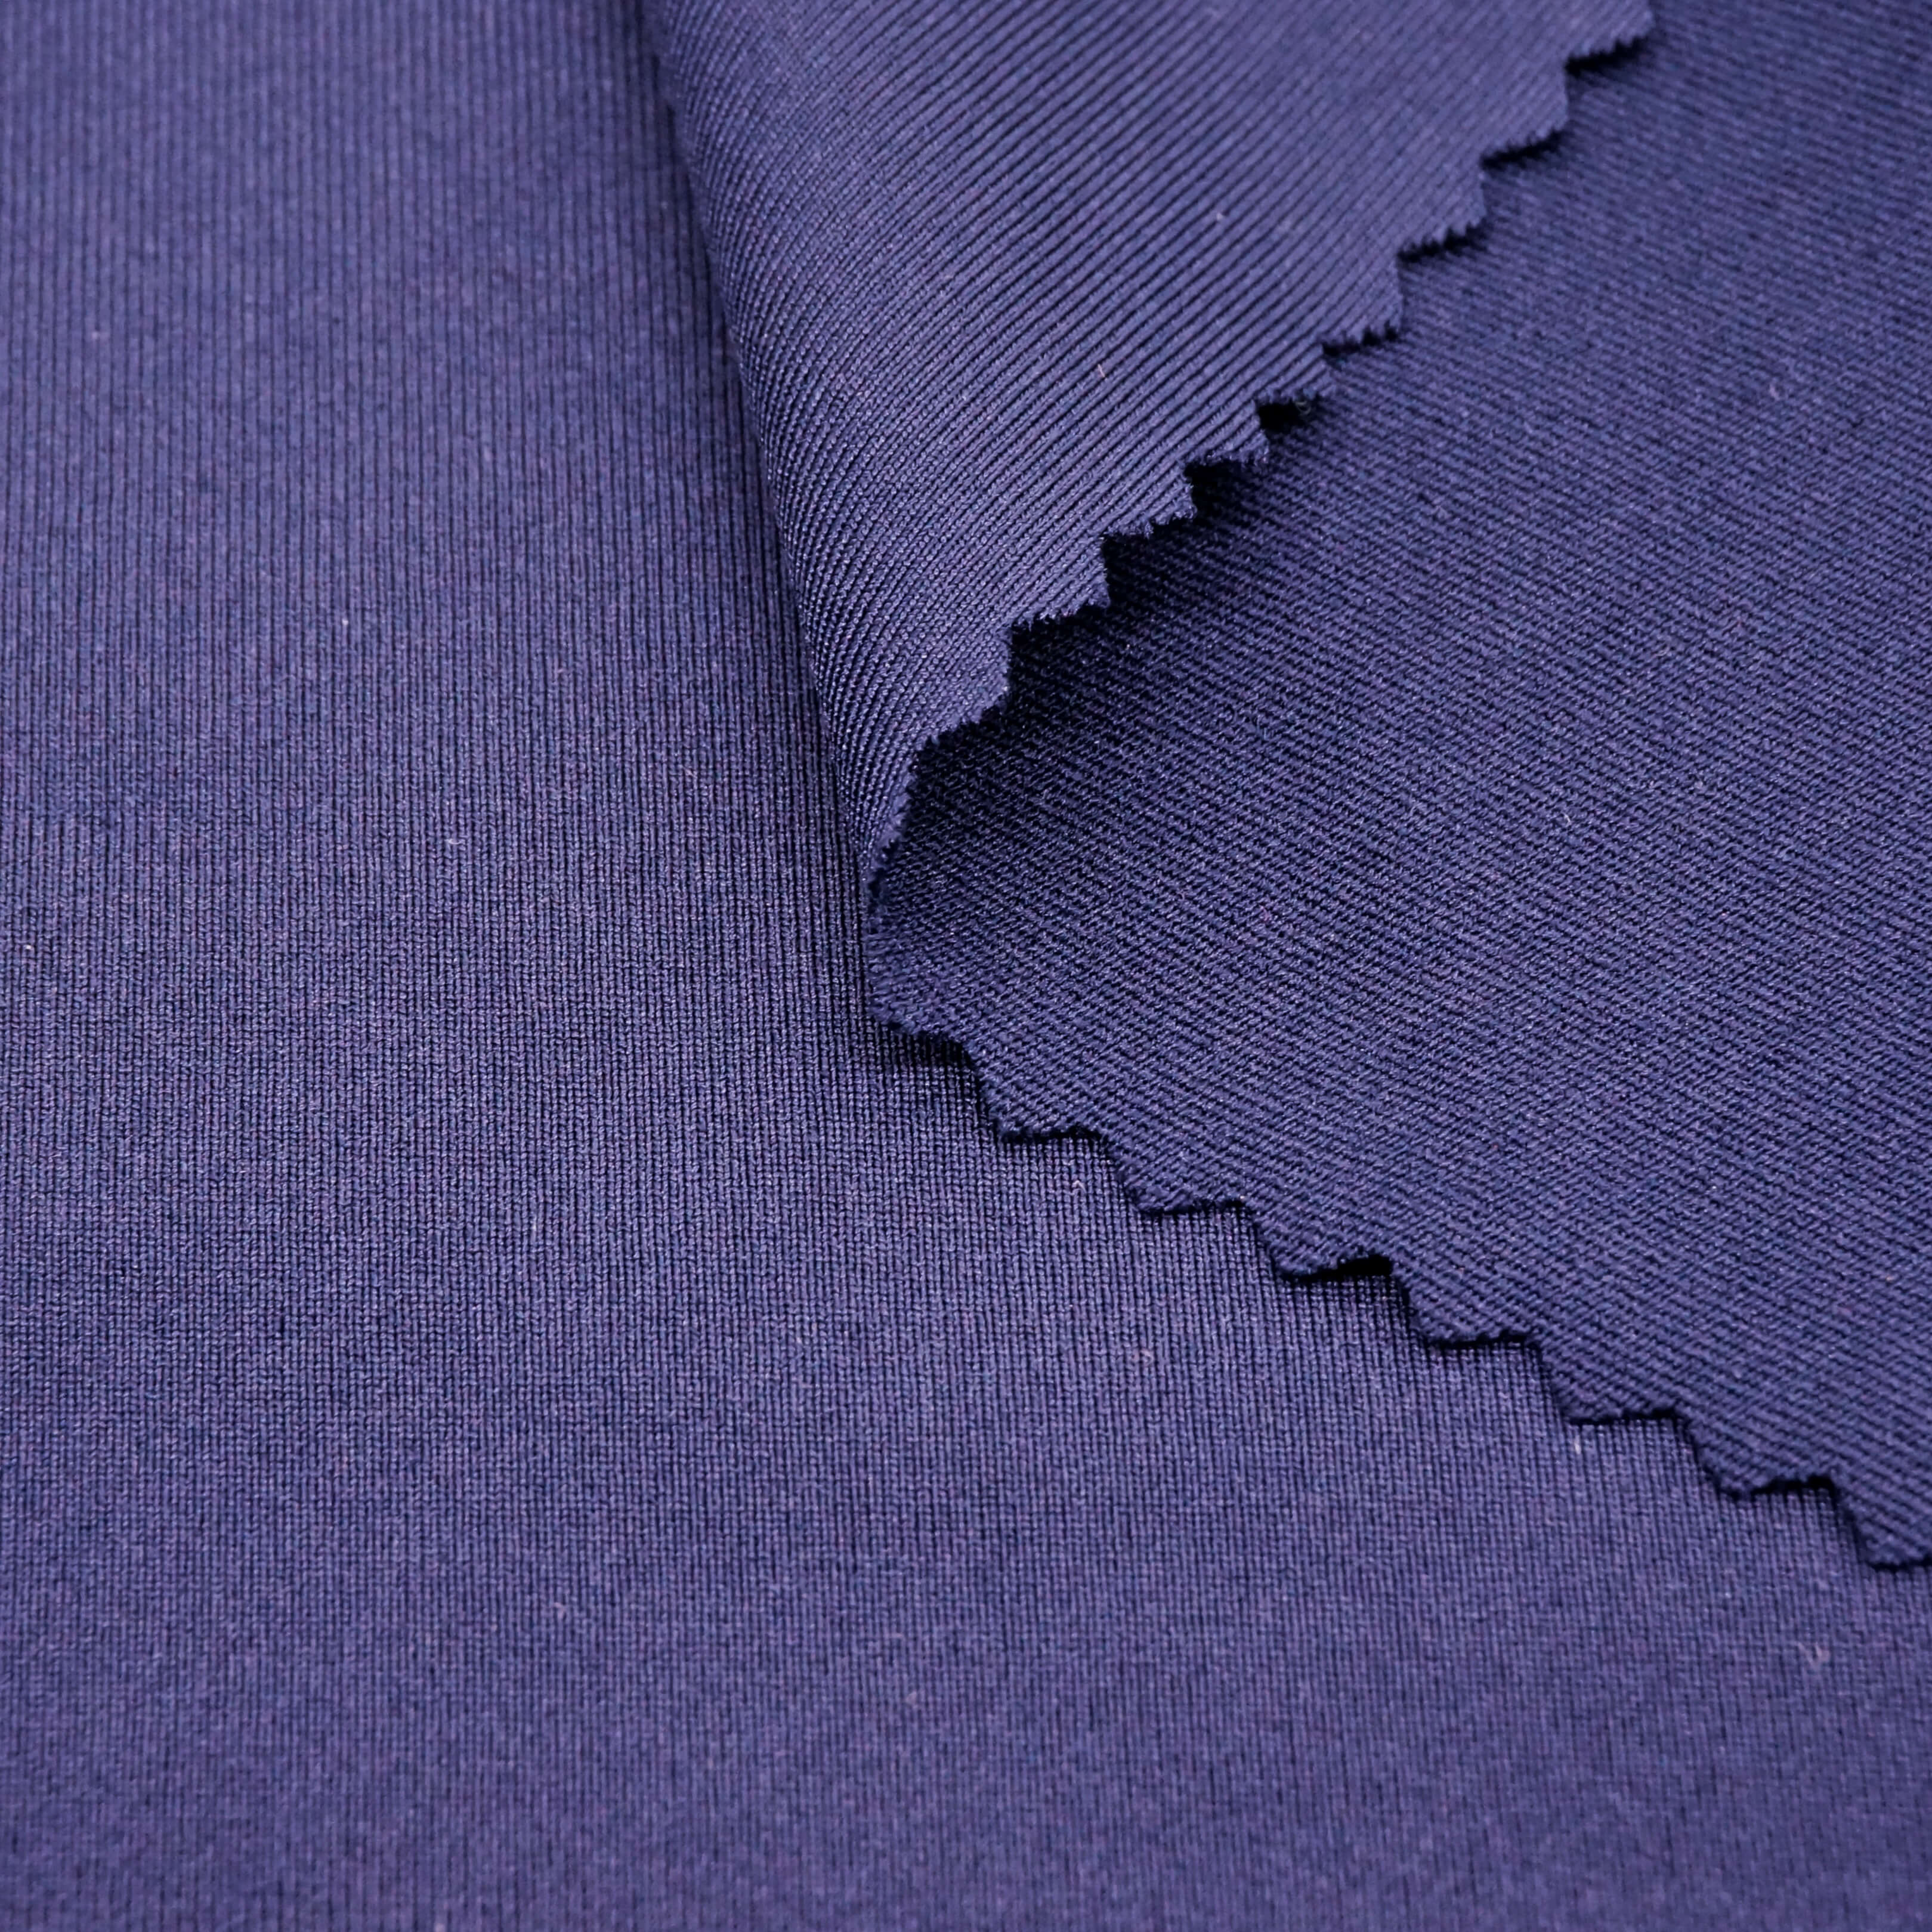 Nylon Spandex Underwear Fabric Manufacturers, Factory